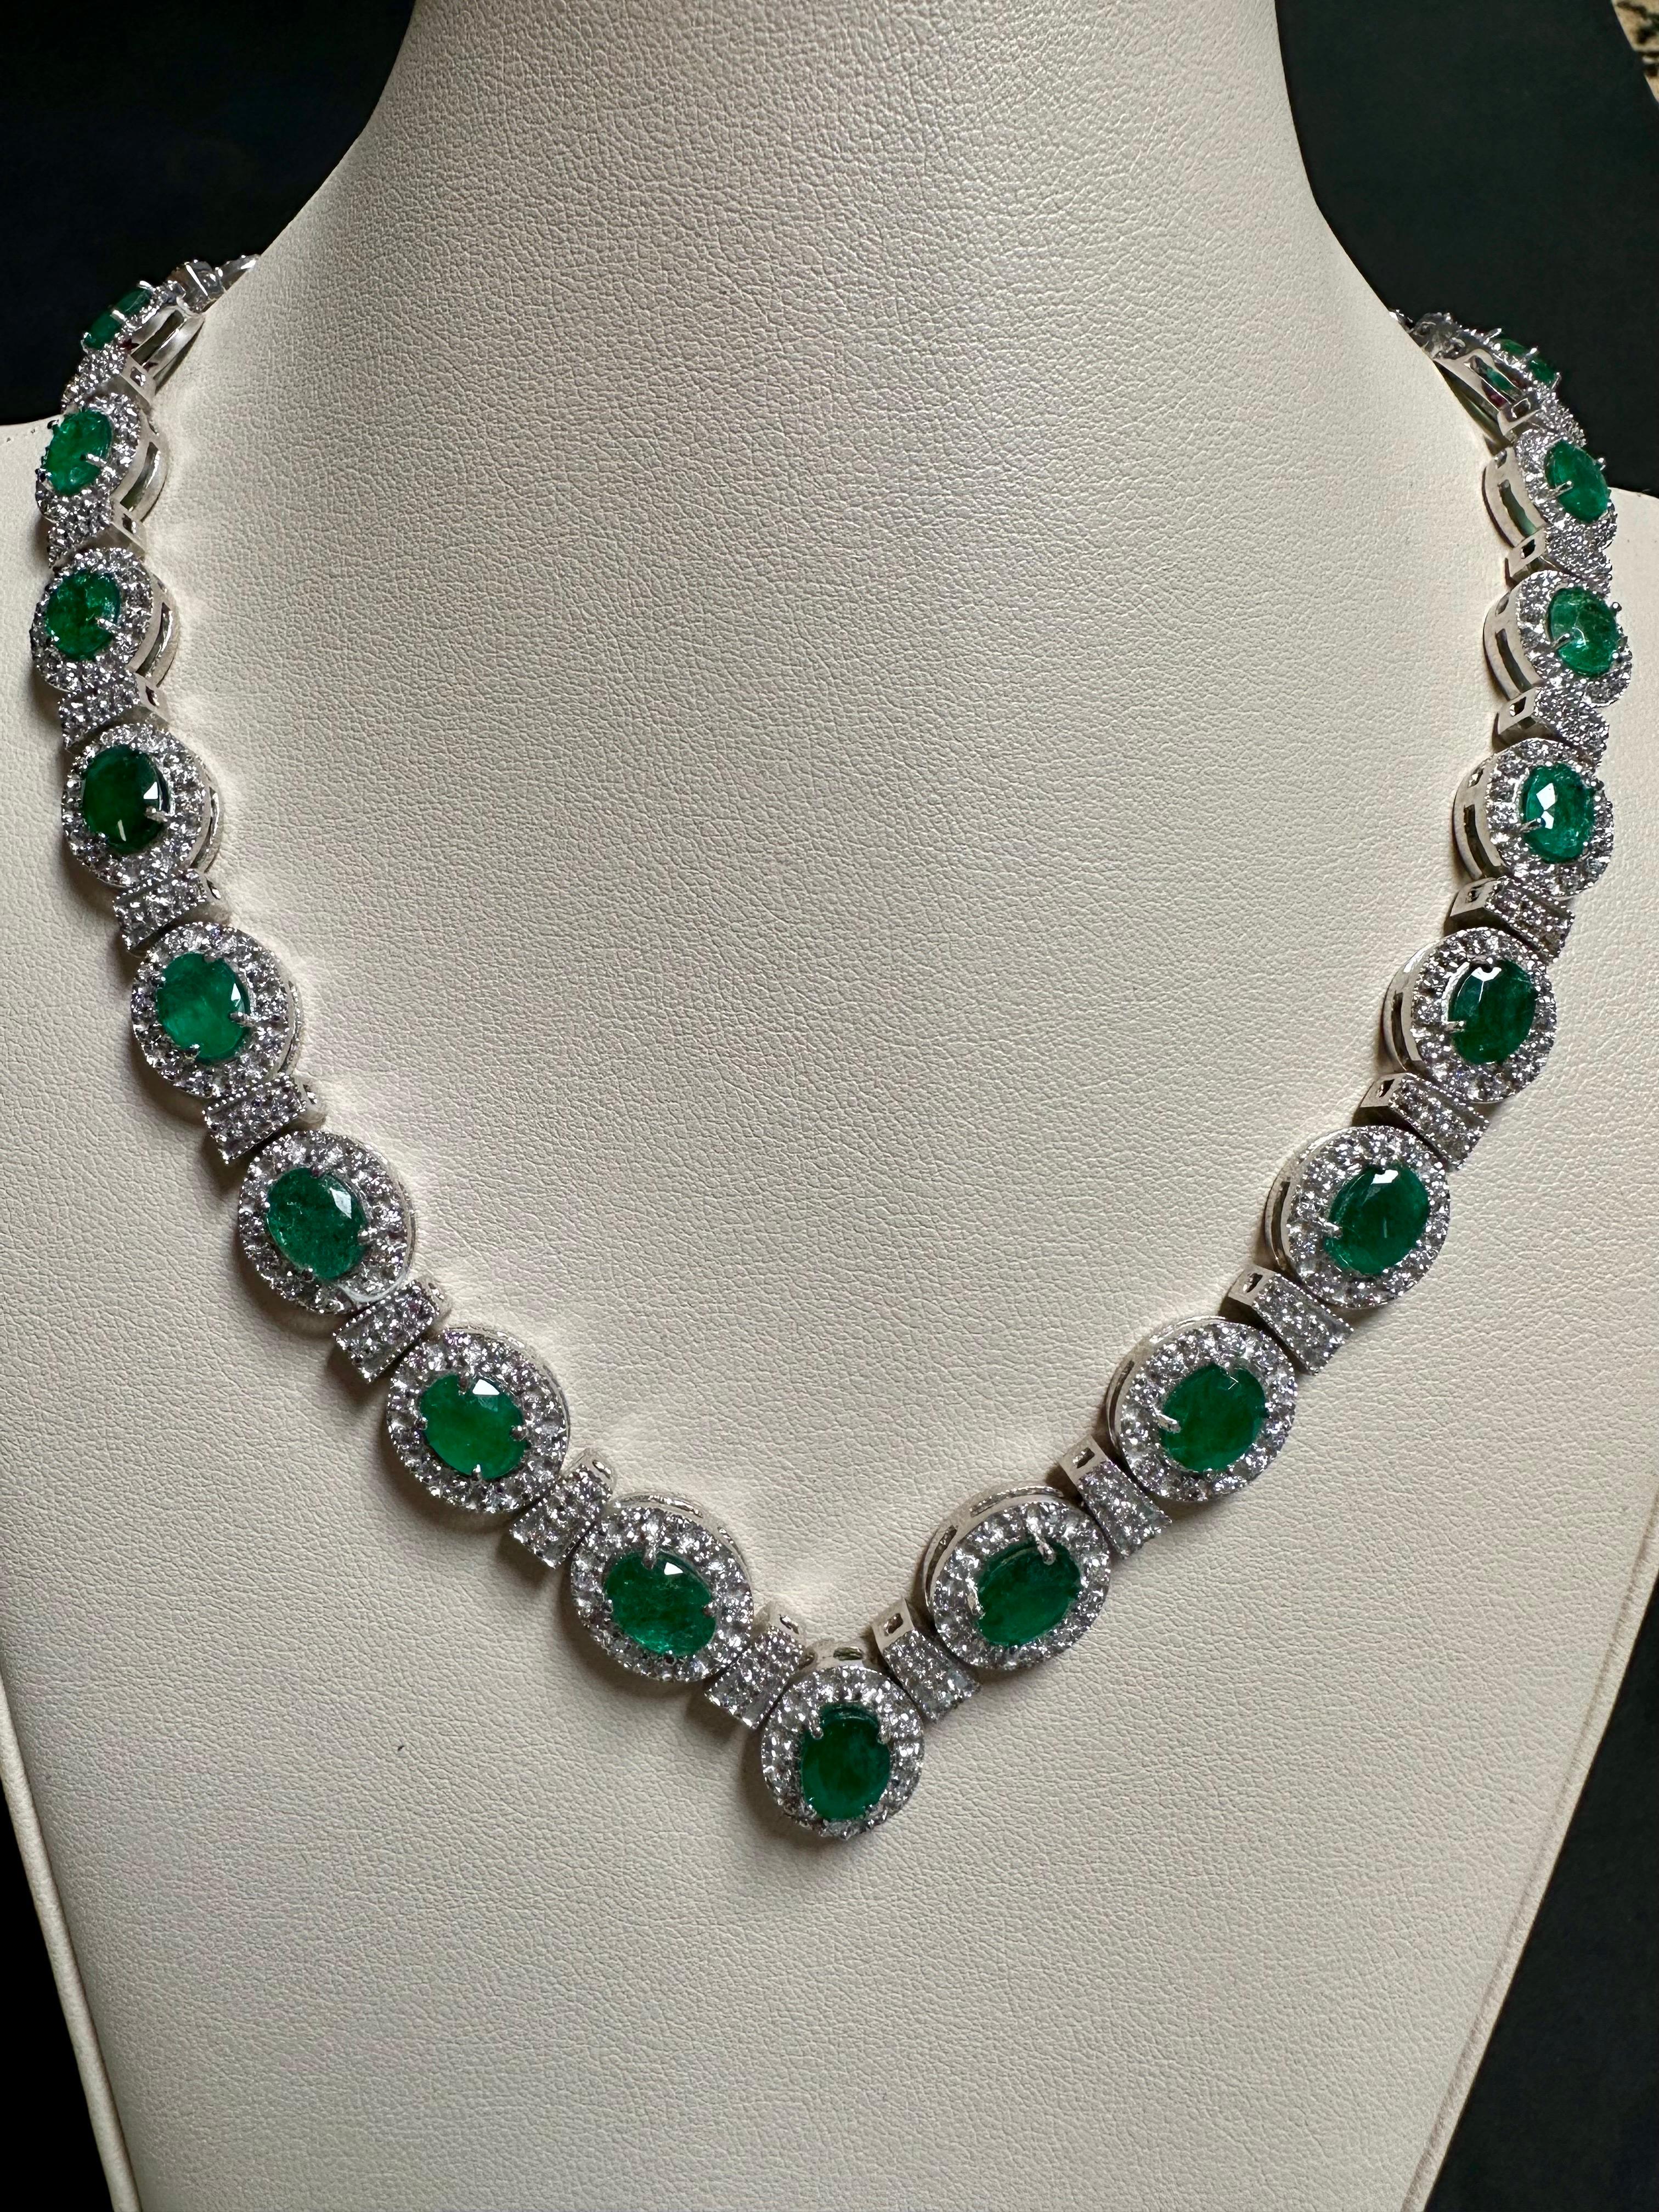 28 Carat Oval Shape Natural Emerald & 5 Carat Diamond Necklace in 14 Karat Gold For Sale 6